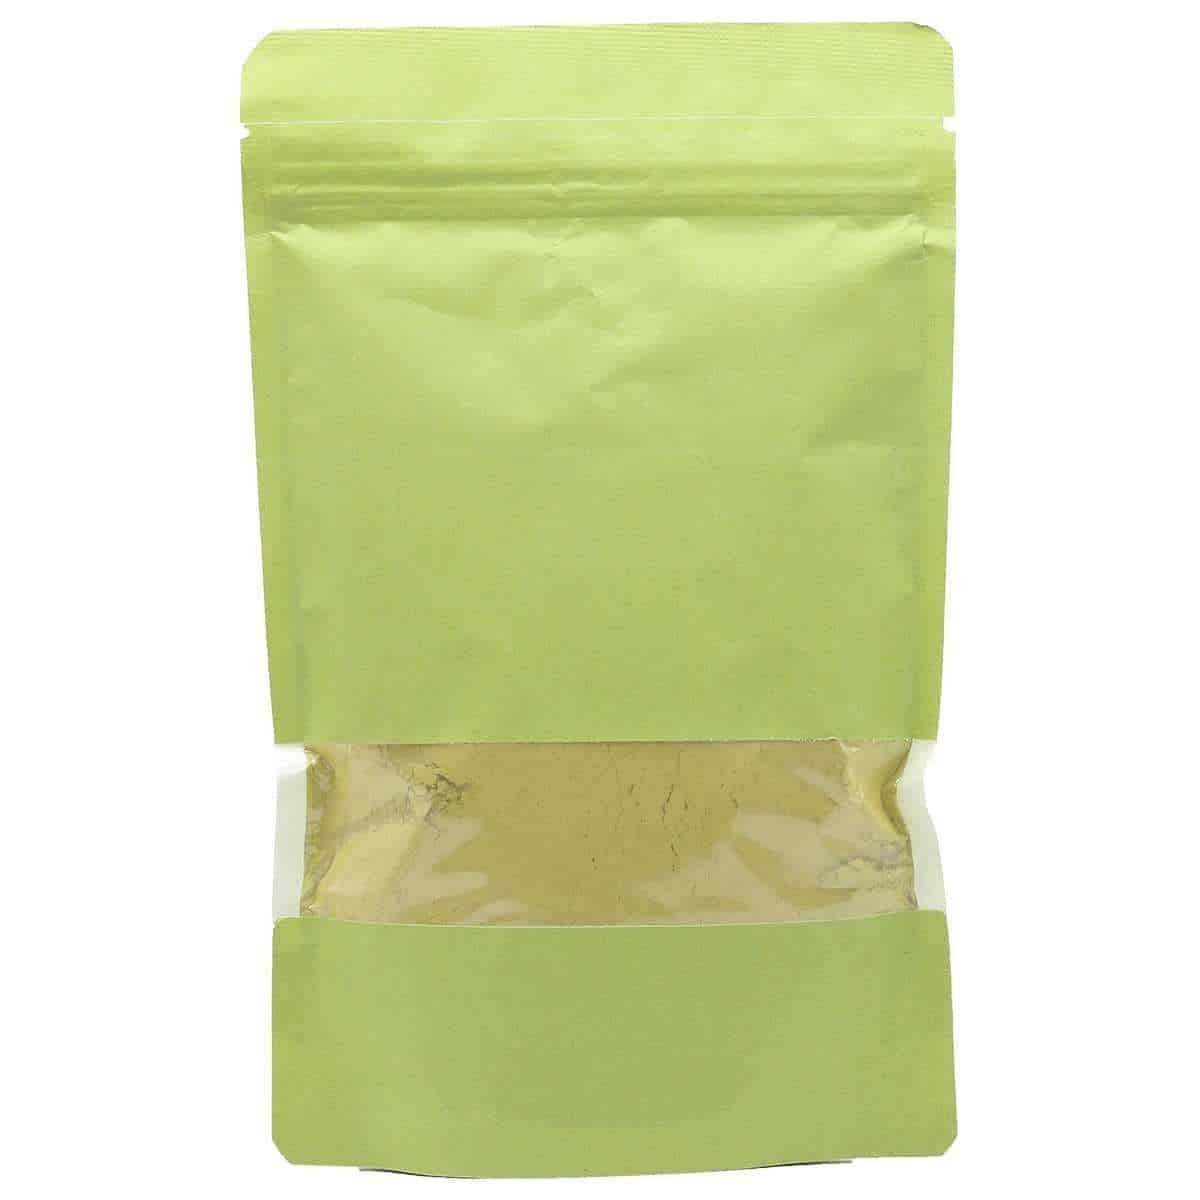 Rootz & Co. Seena Leaf Powder Pack of 2